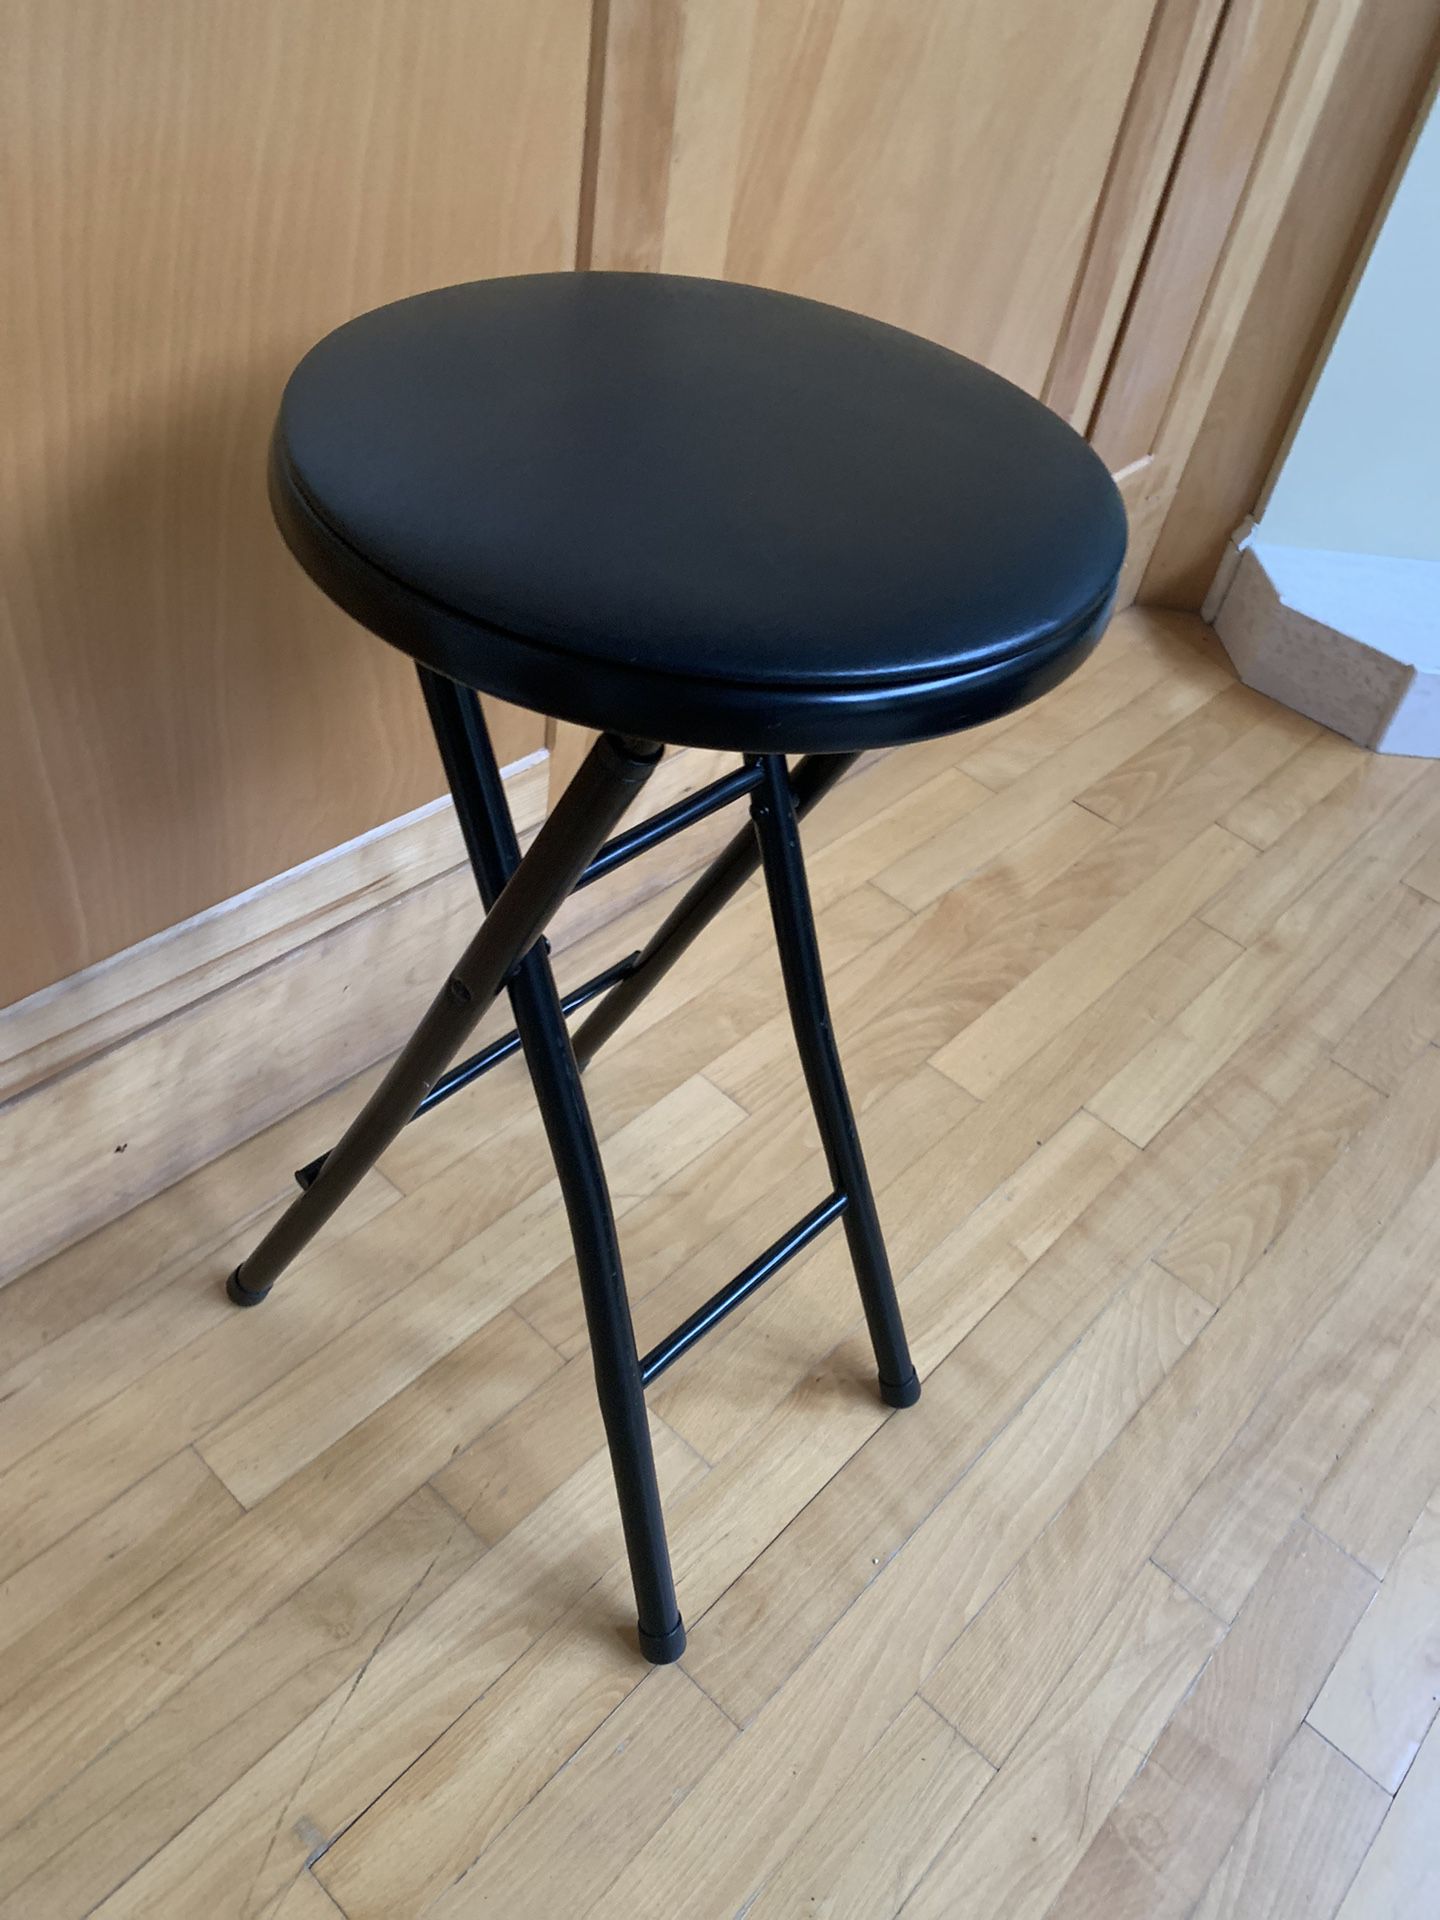 Black Metal Stool Chair 24” Height Light Cushion Seat  Folds Folding Beach Bar Counter Desk Table